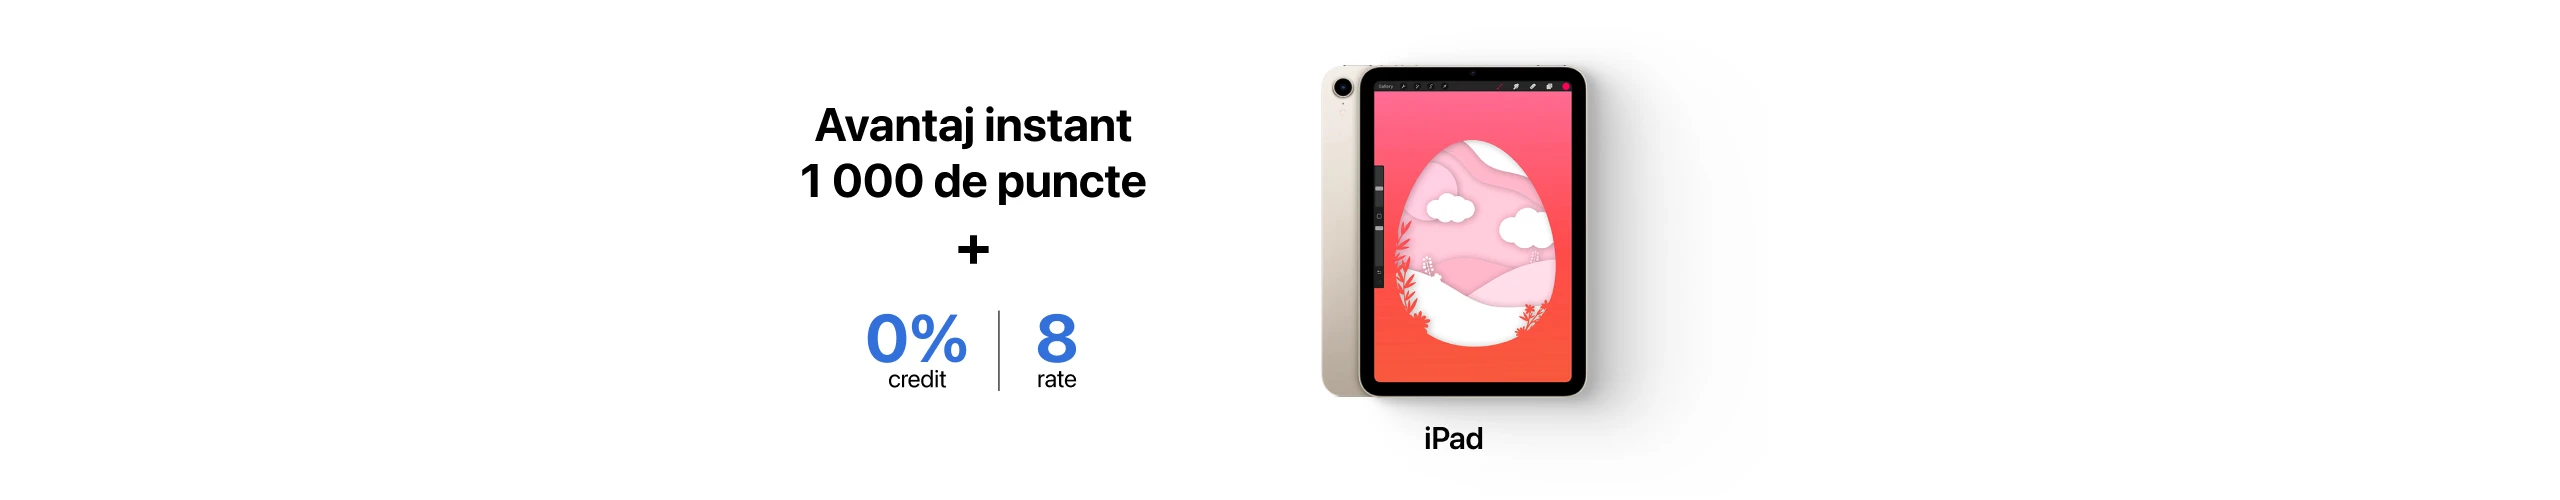 Avantaj instant 1000 de puncte + Credit 0% | 8 Rate la iPad